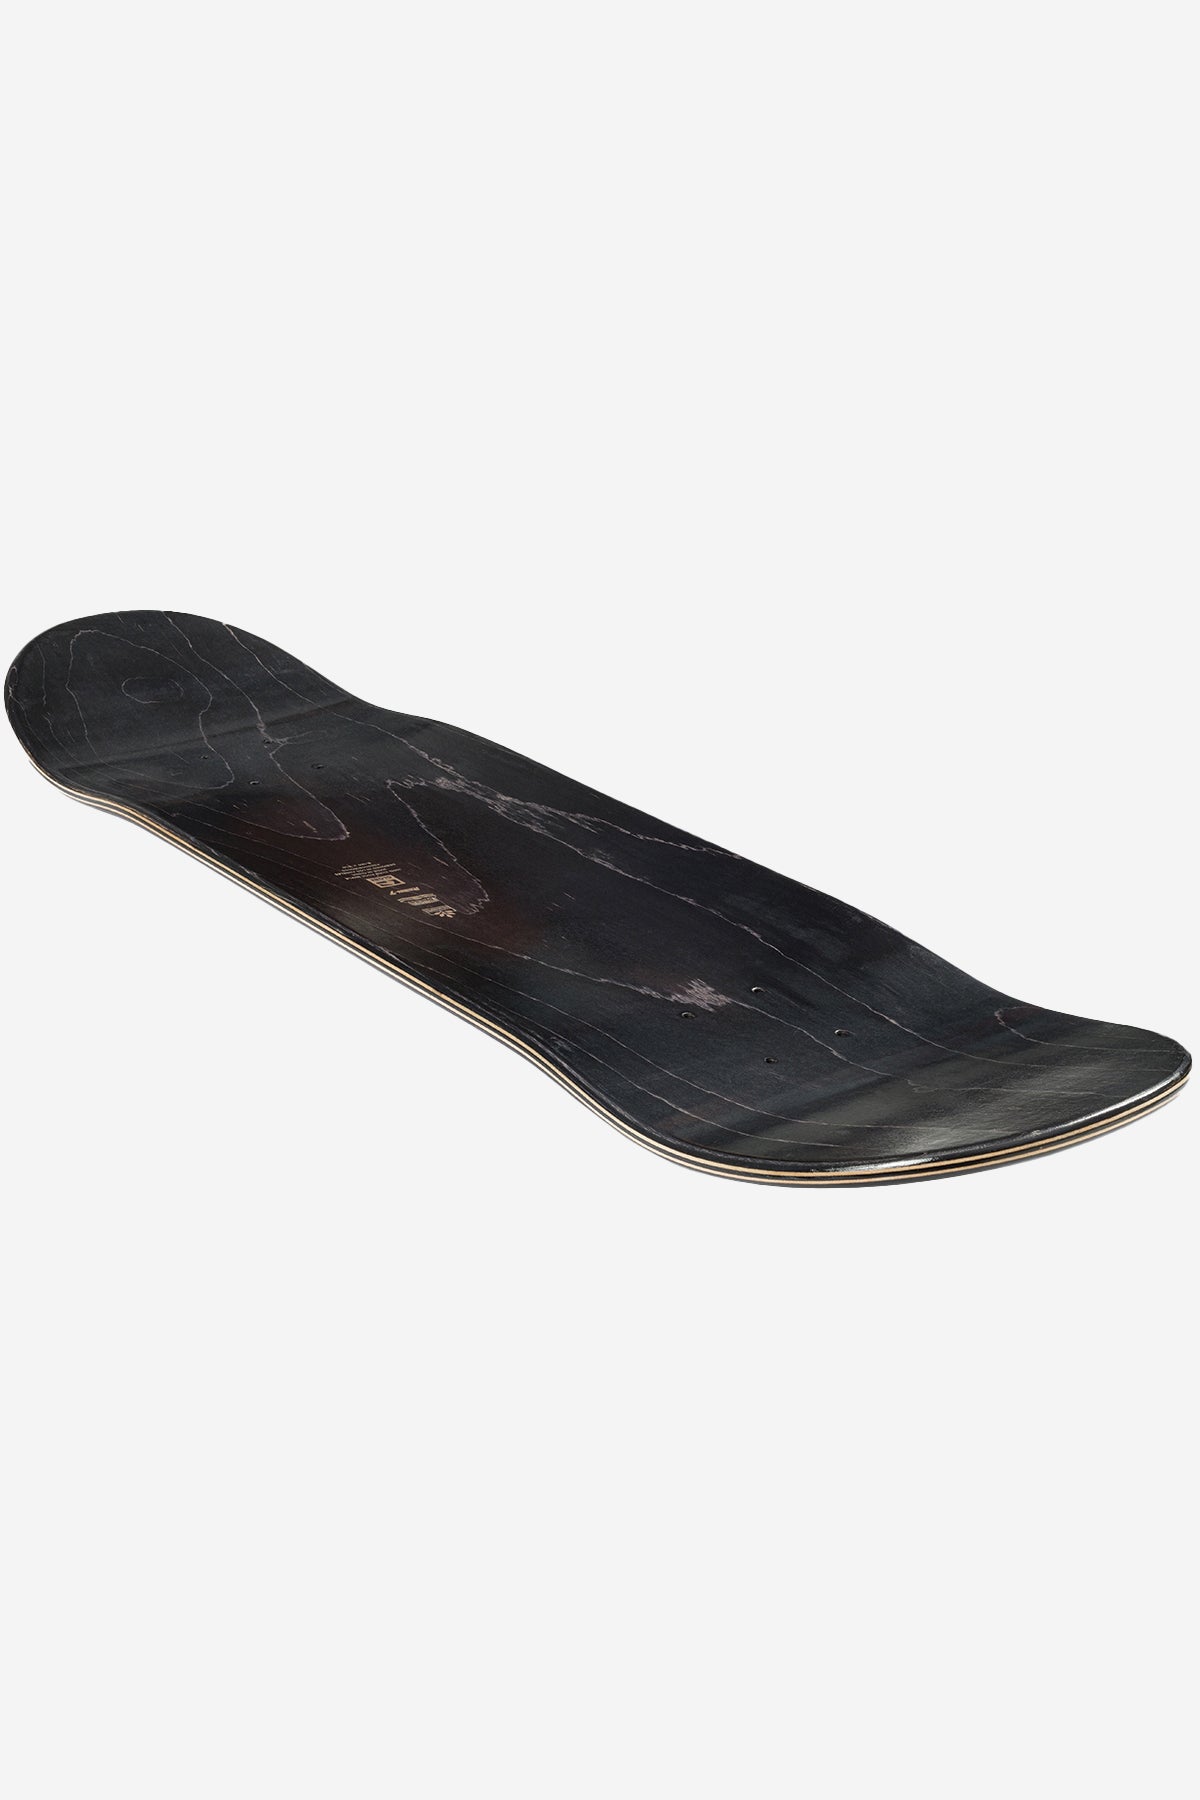 Globe - G1 Argo - Zwart Camo - 8,125". Skateboard Deck